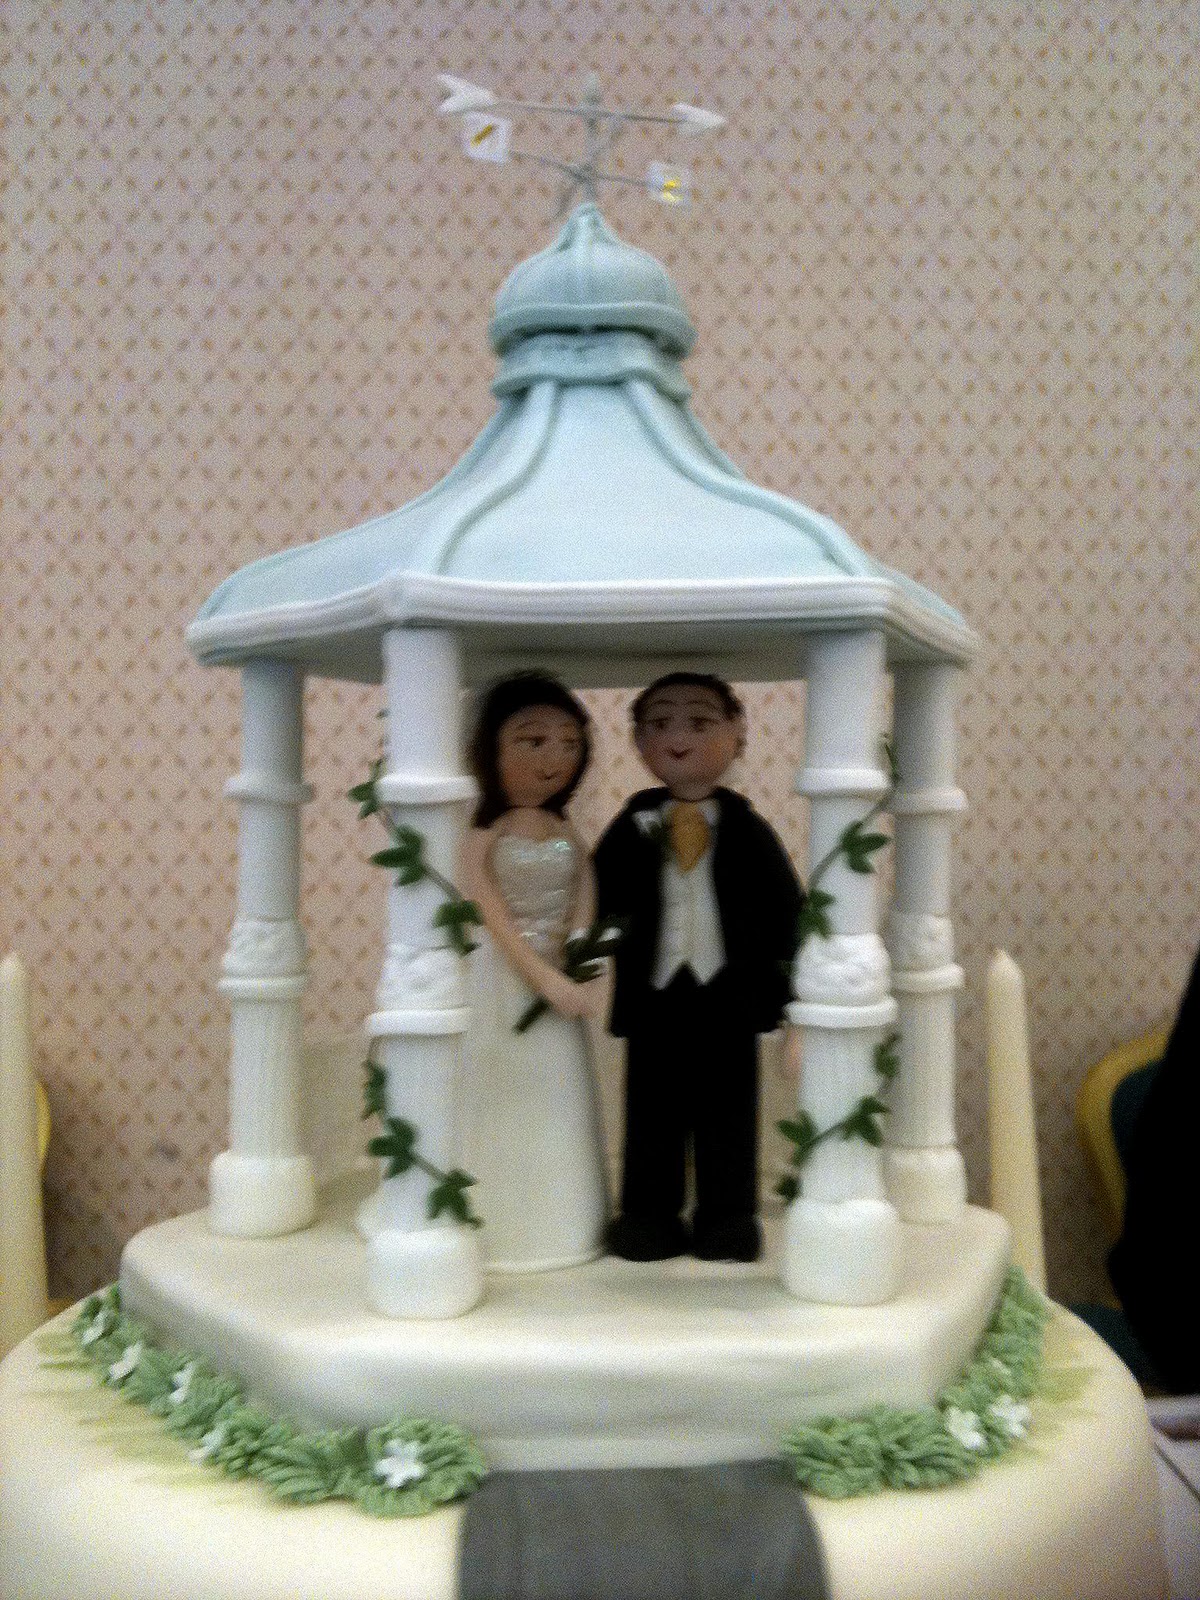 gazebo wedding cake from the